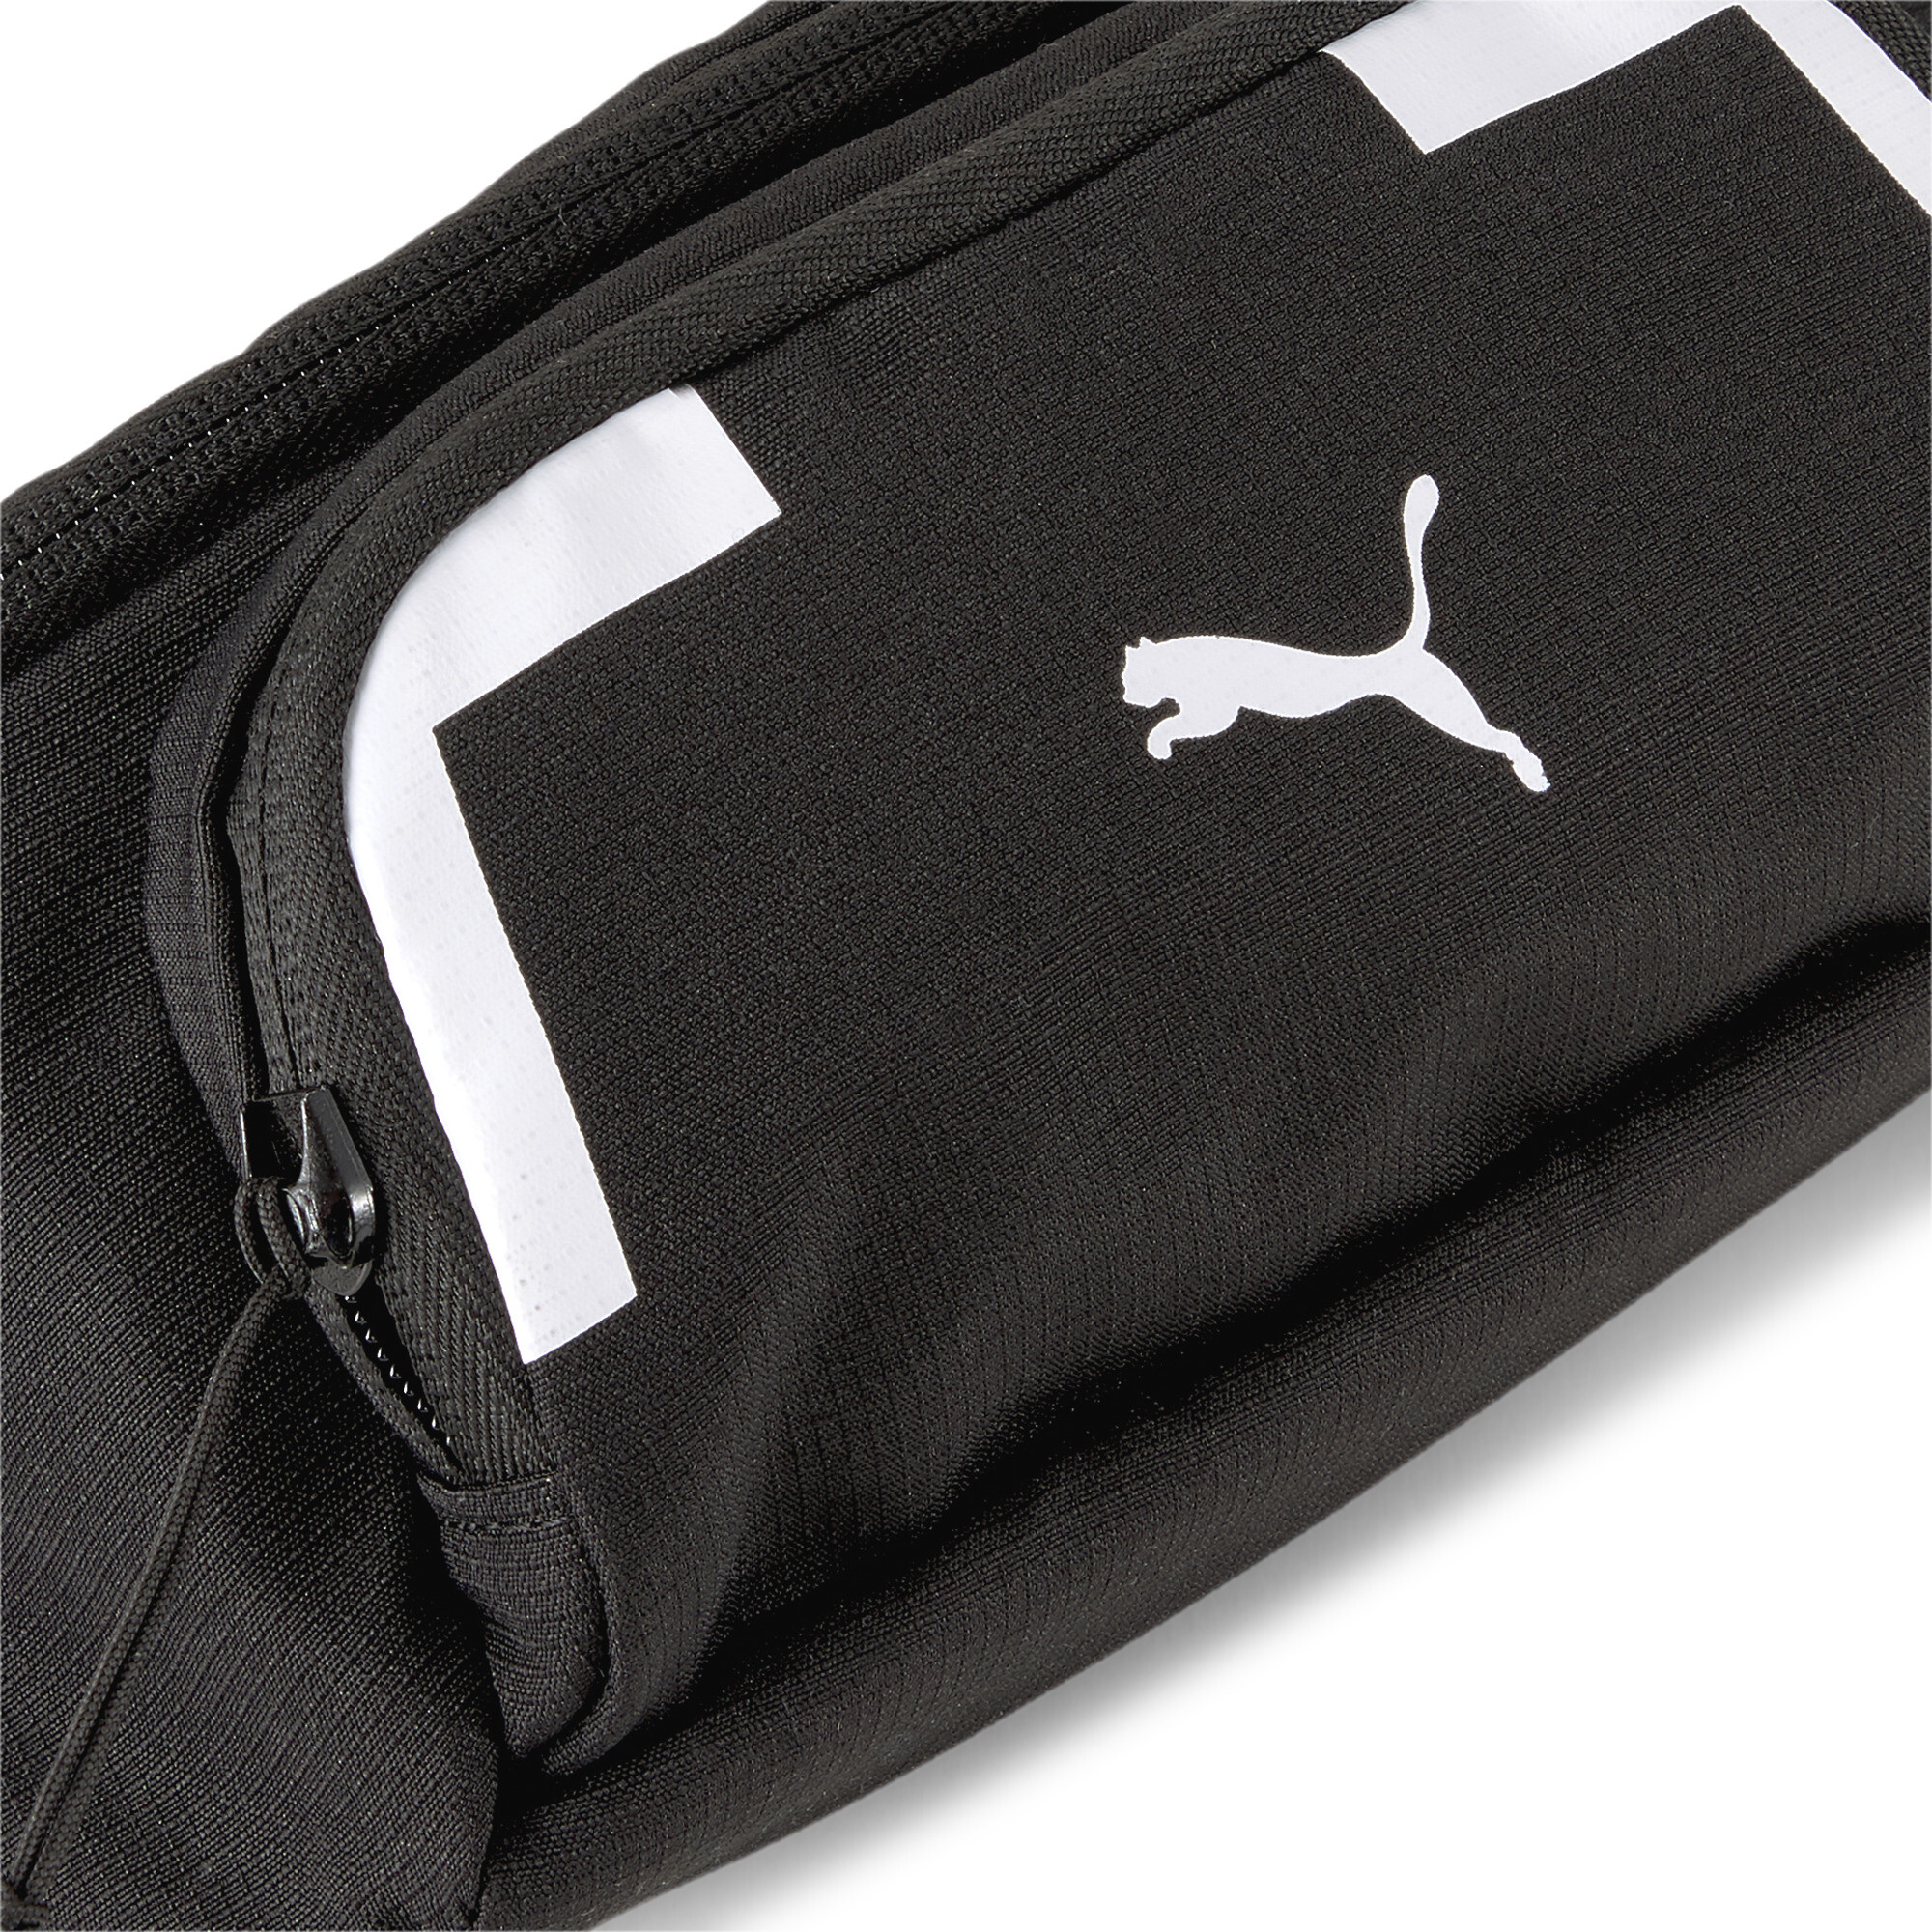 Men's Puma Training Waist Bag, Black, Accessories